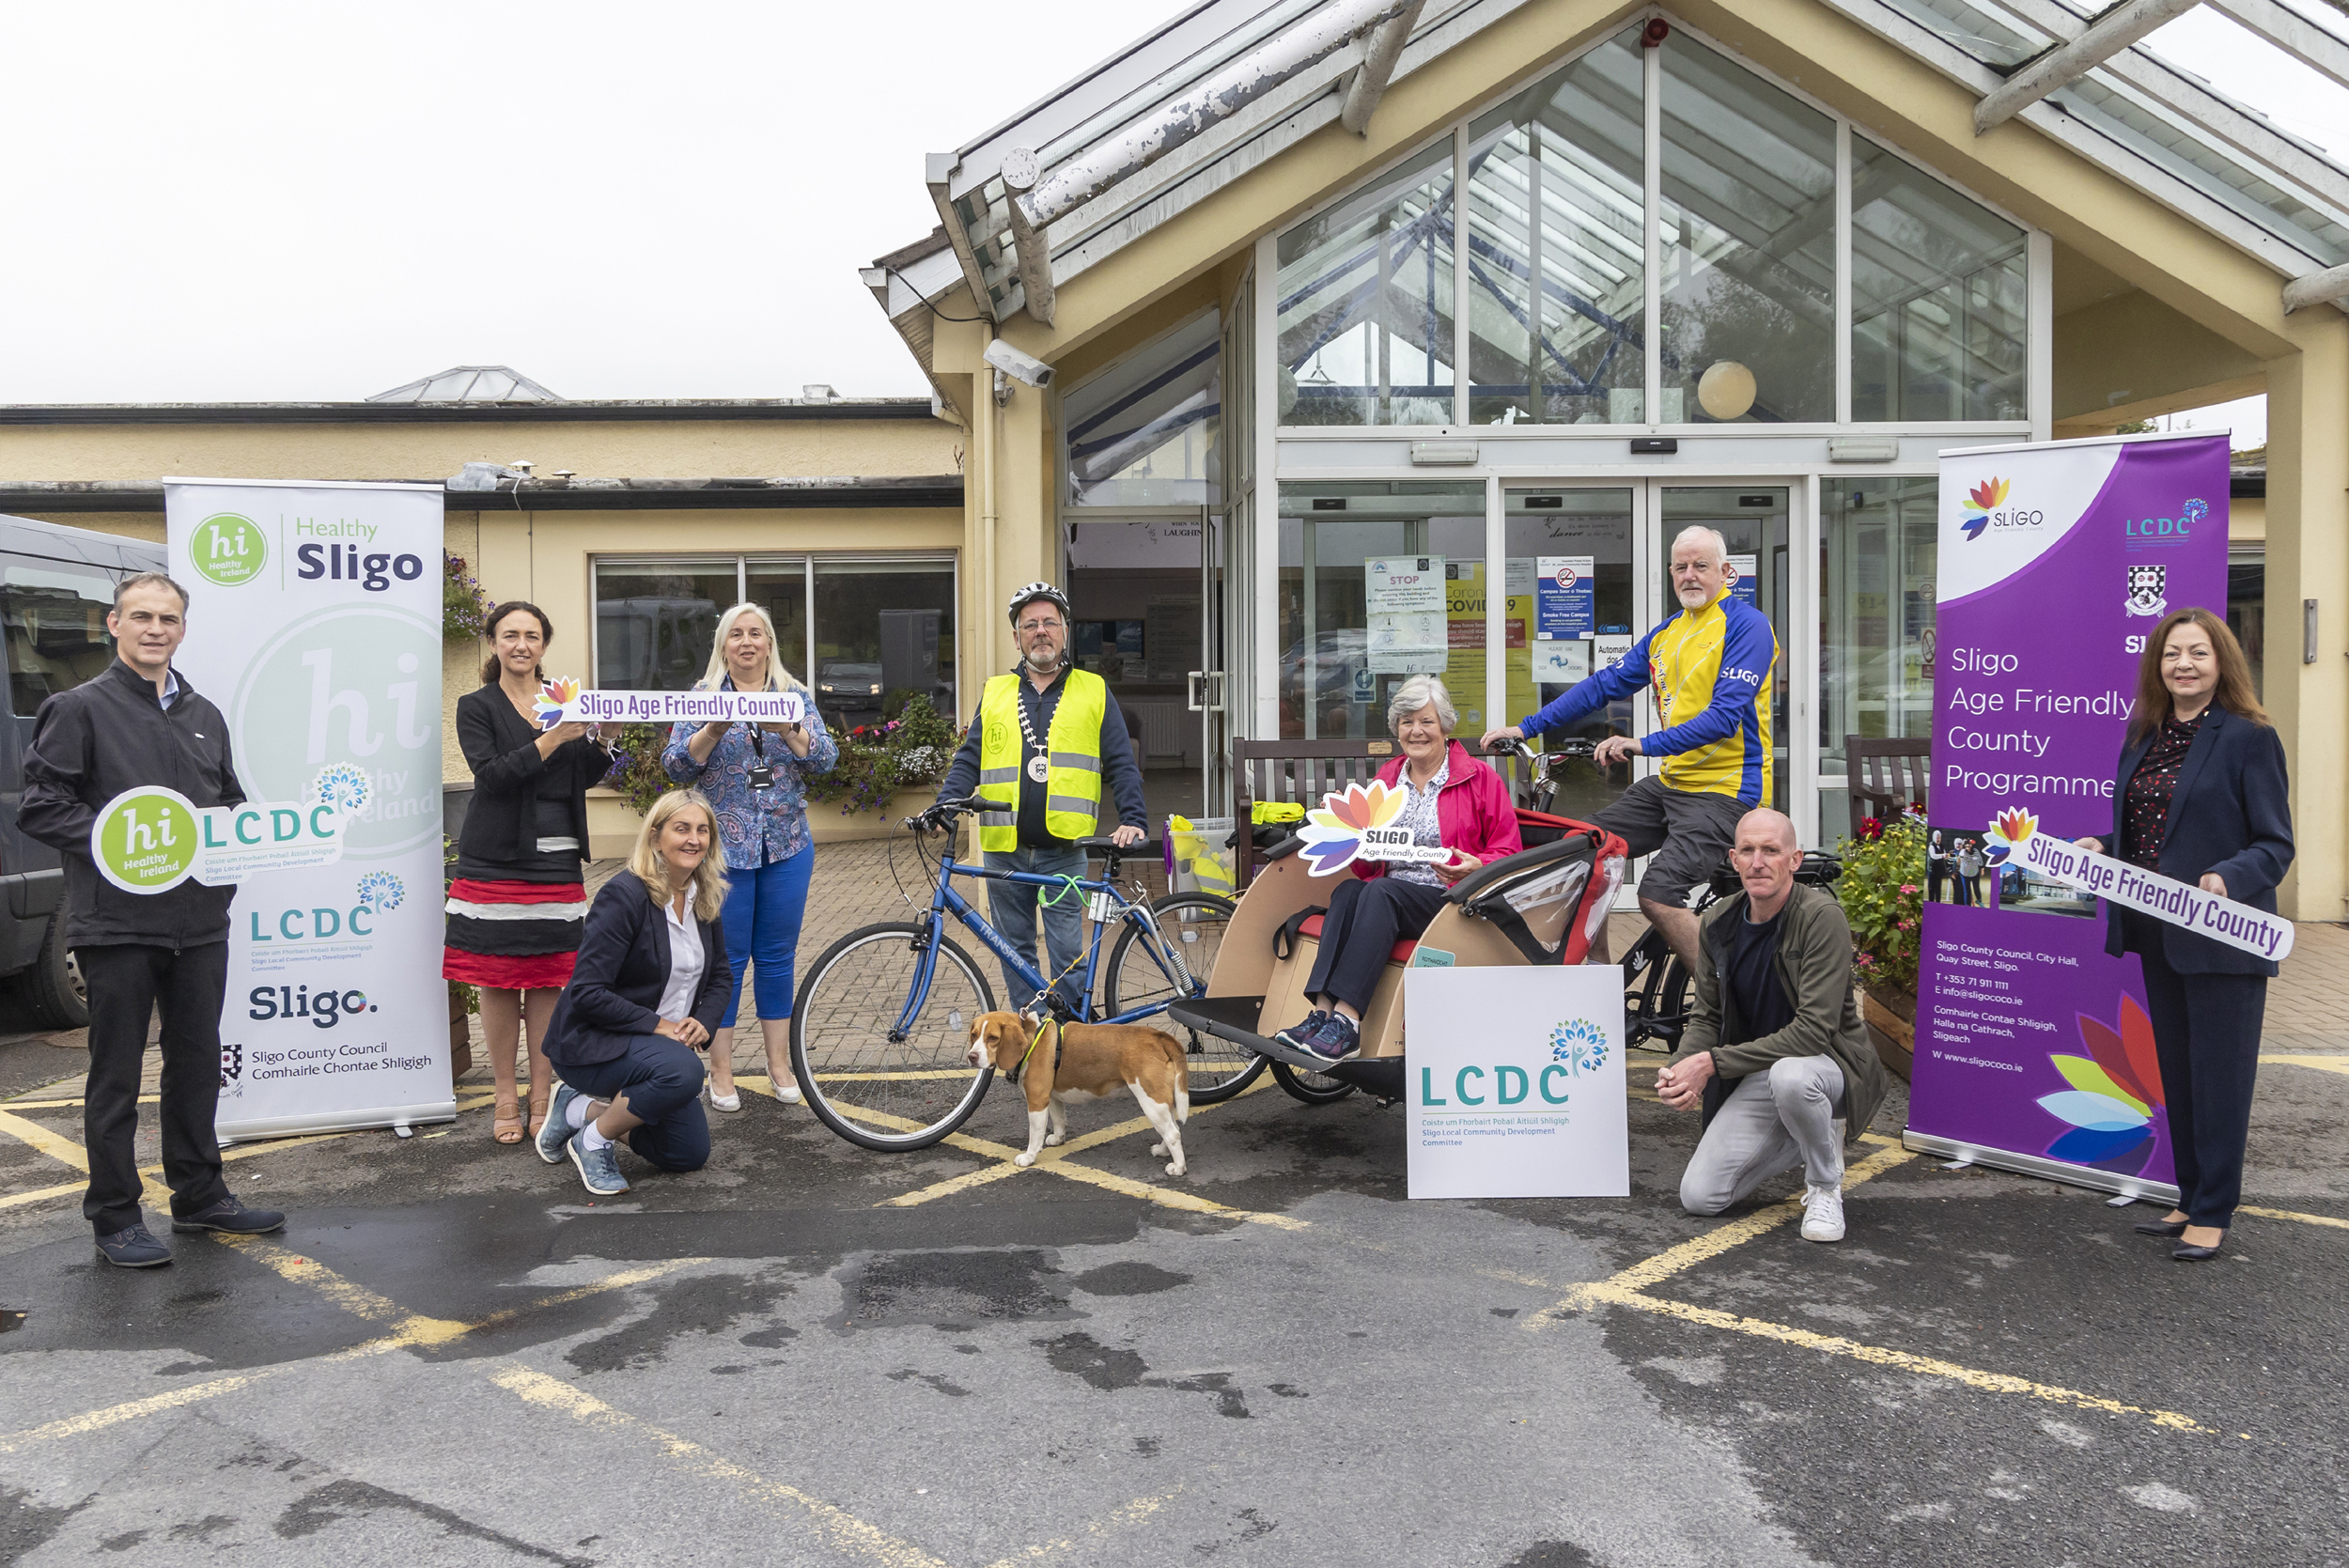 Celebrating Age Friendly / Healthy Sligo as part of National Bike Week.